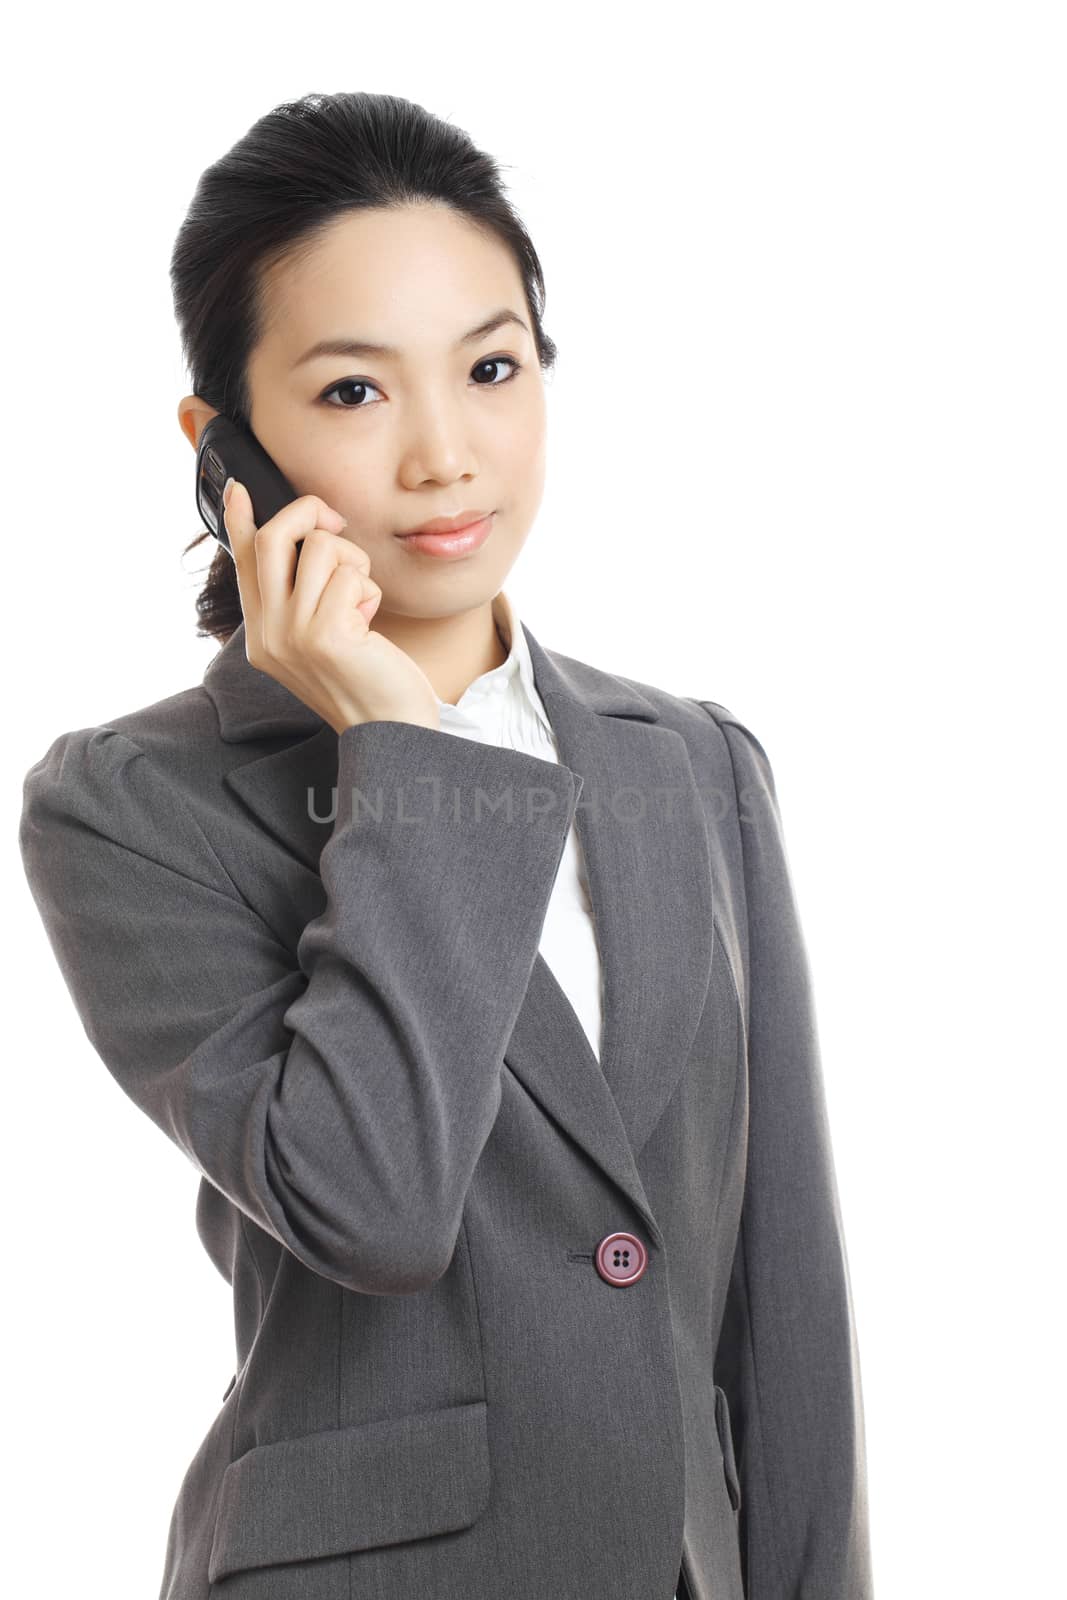 Woman using mobile phone by leungchopan